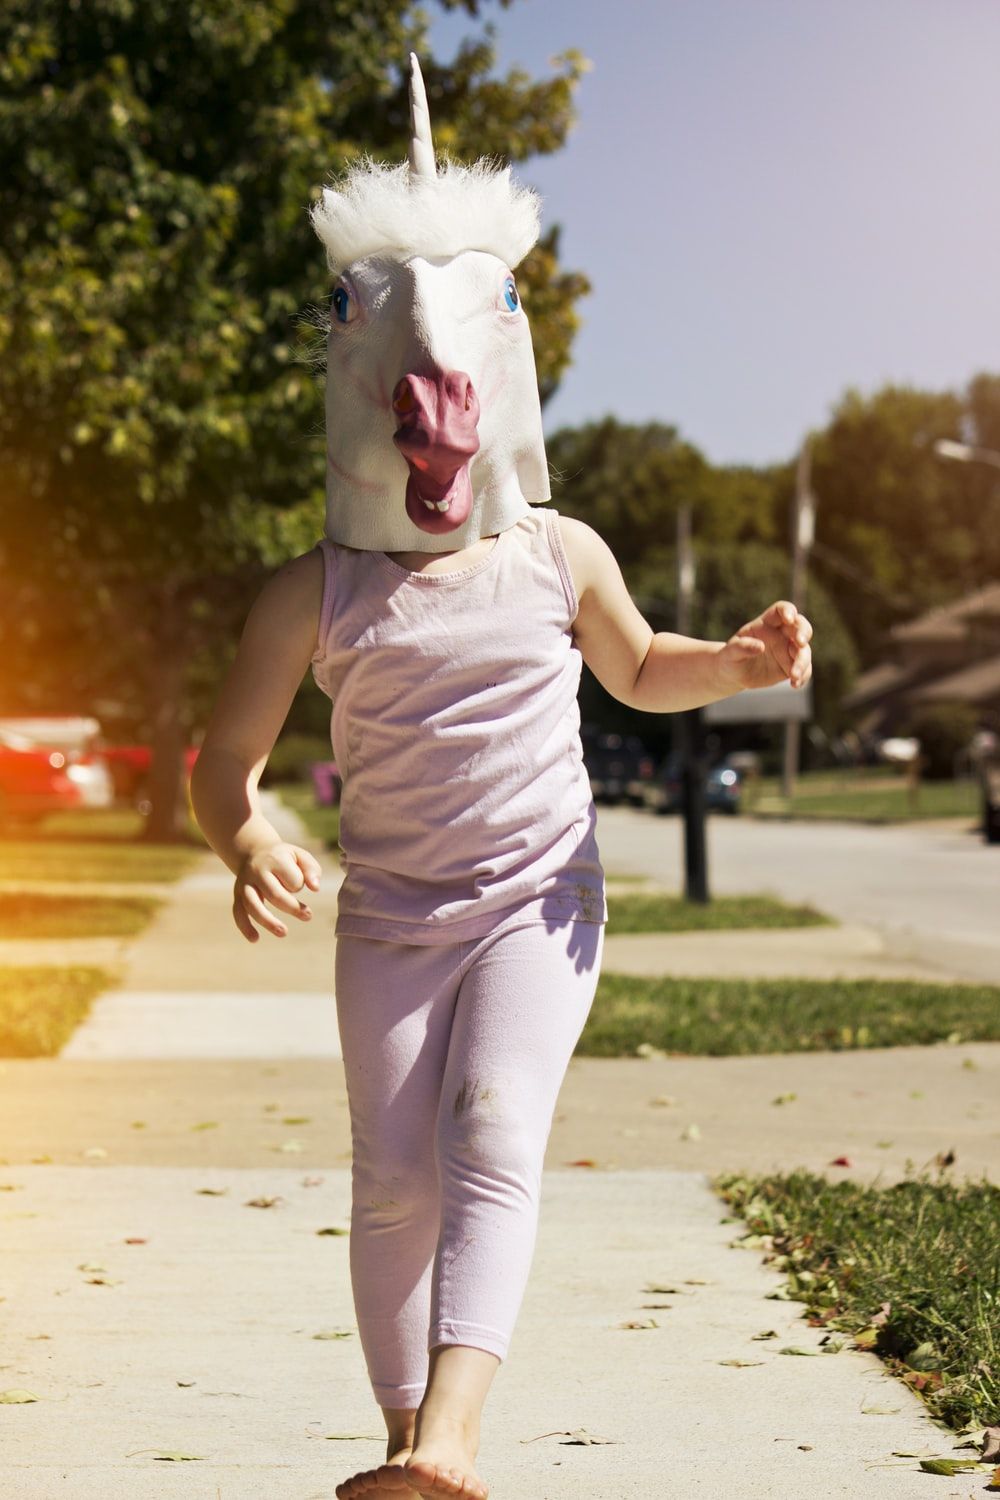 Unicorns Picture. Download Free Image